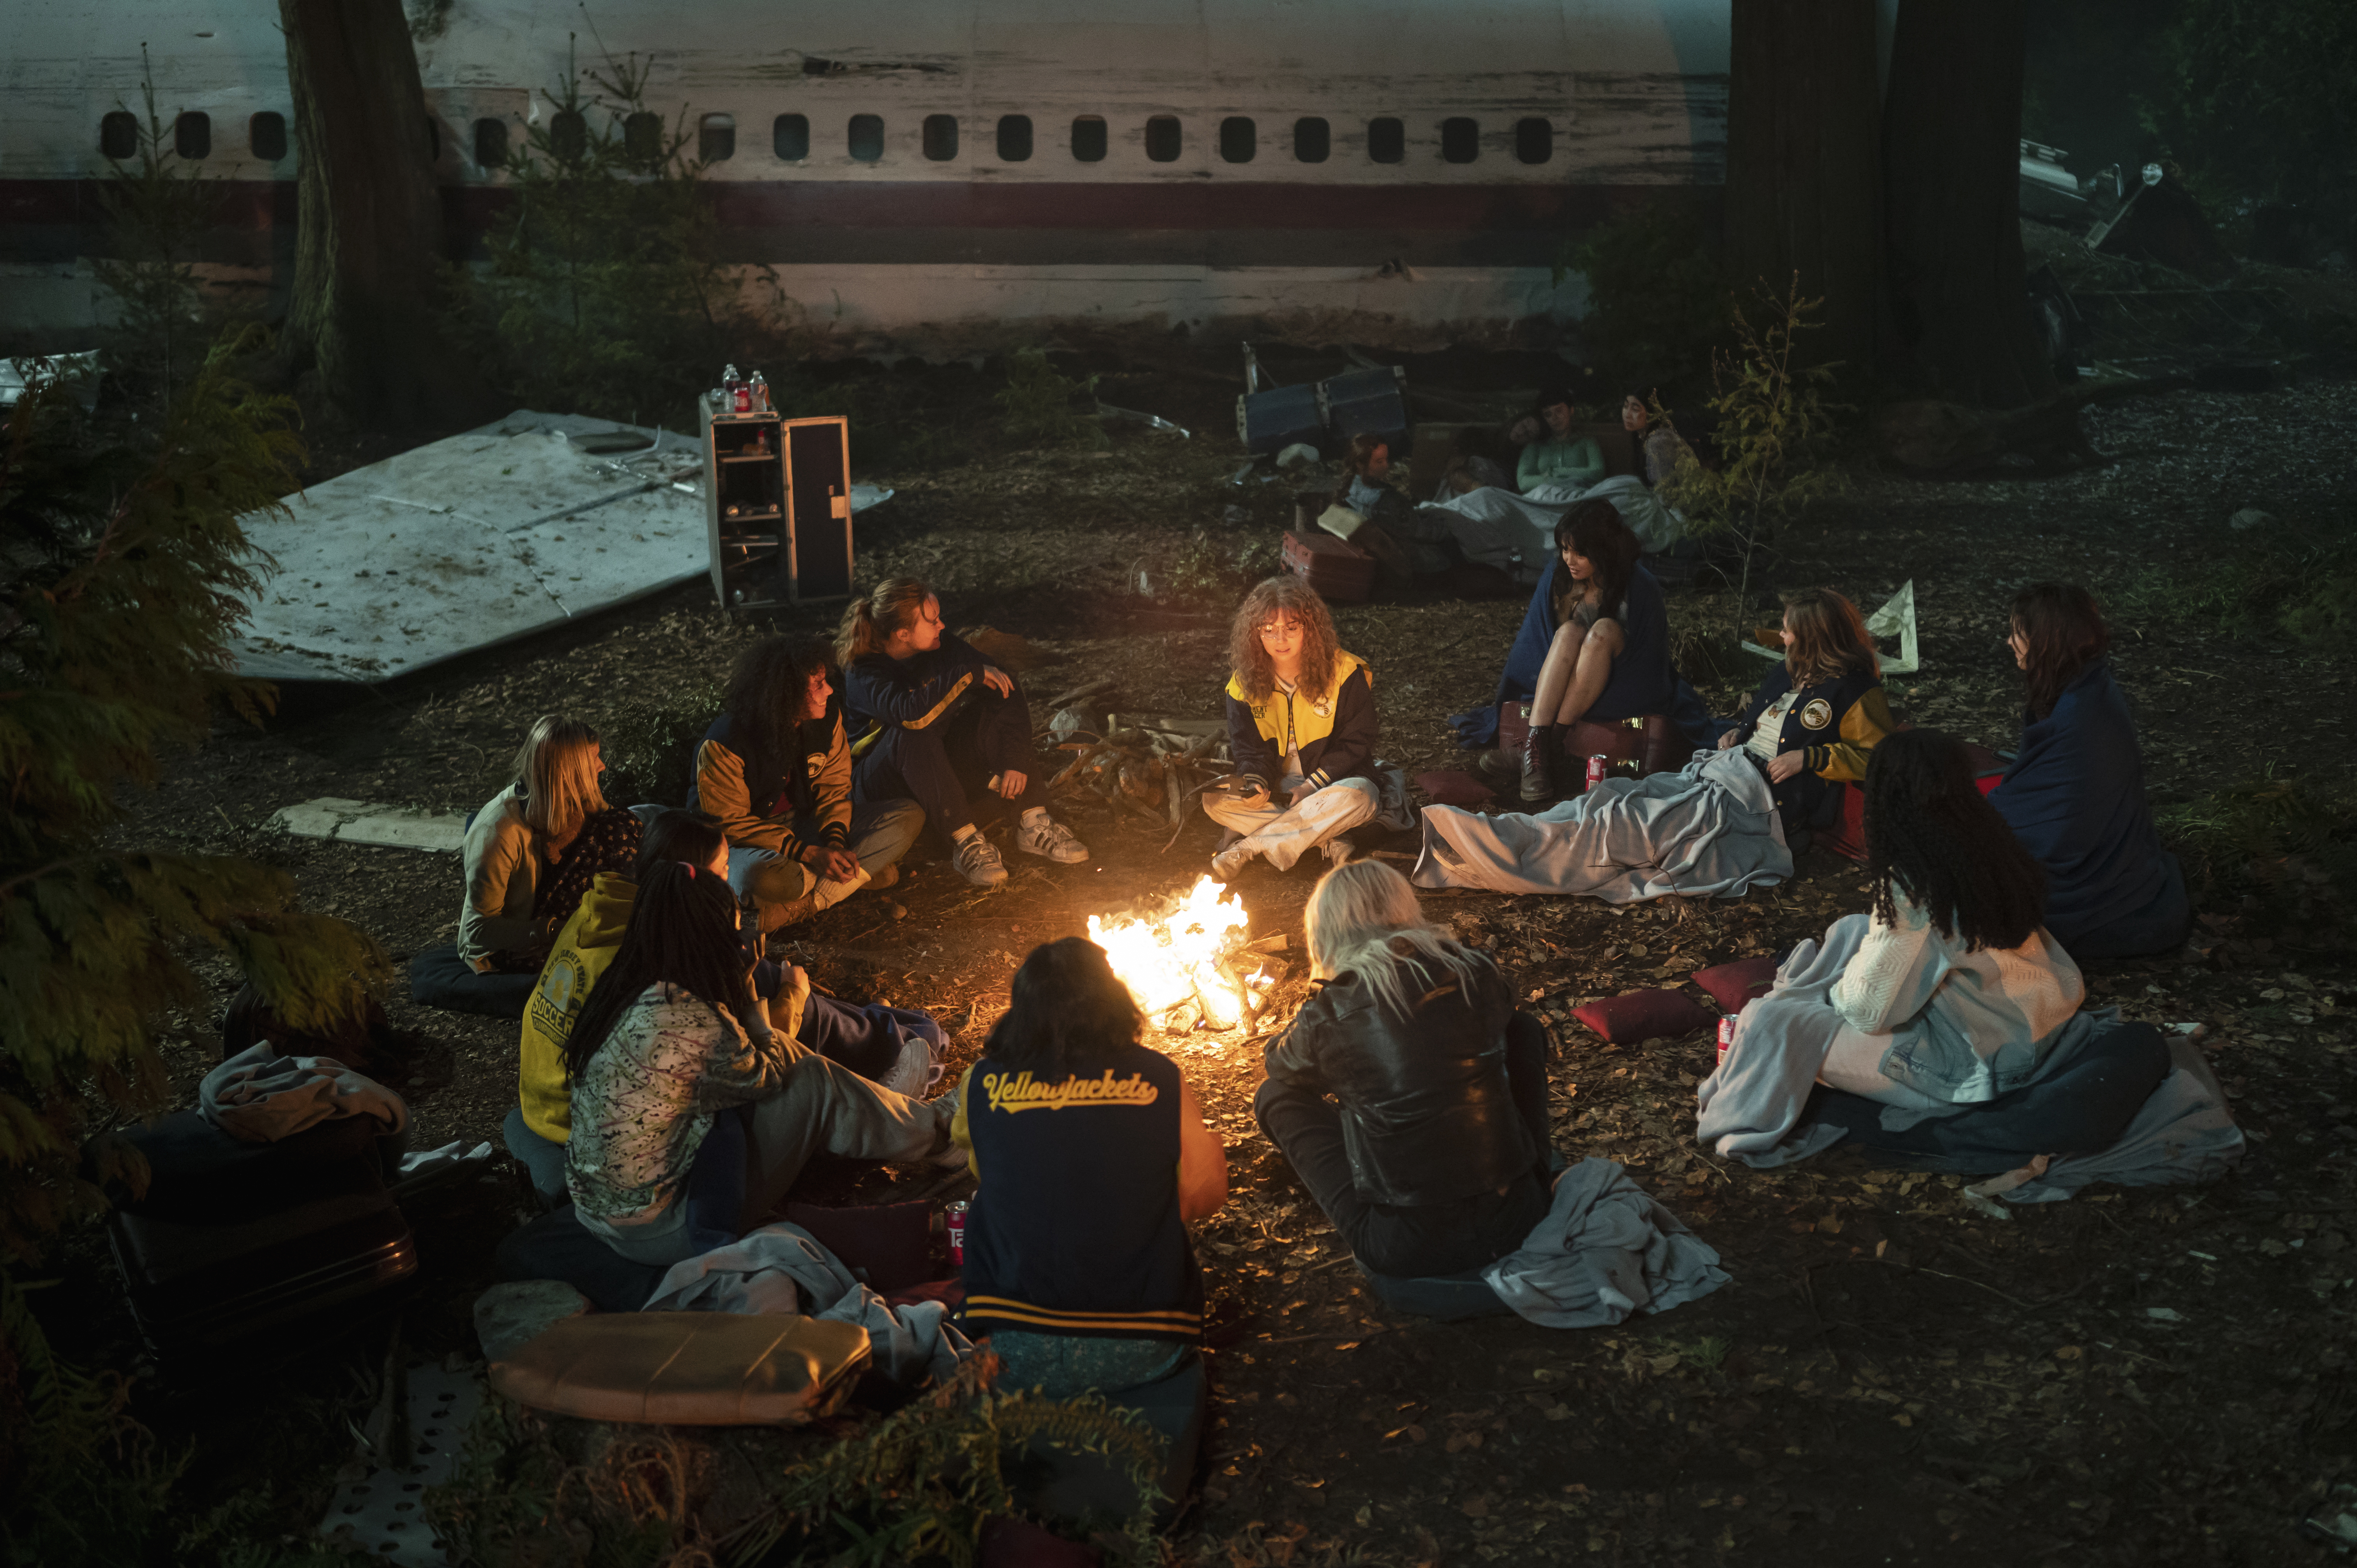 A campfire provides warmth for the plane crash survivors in a wide shot.